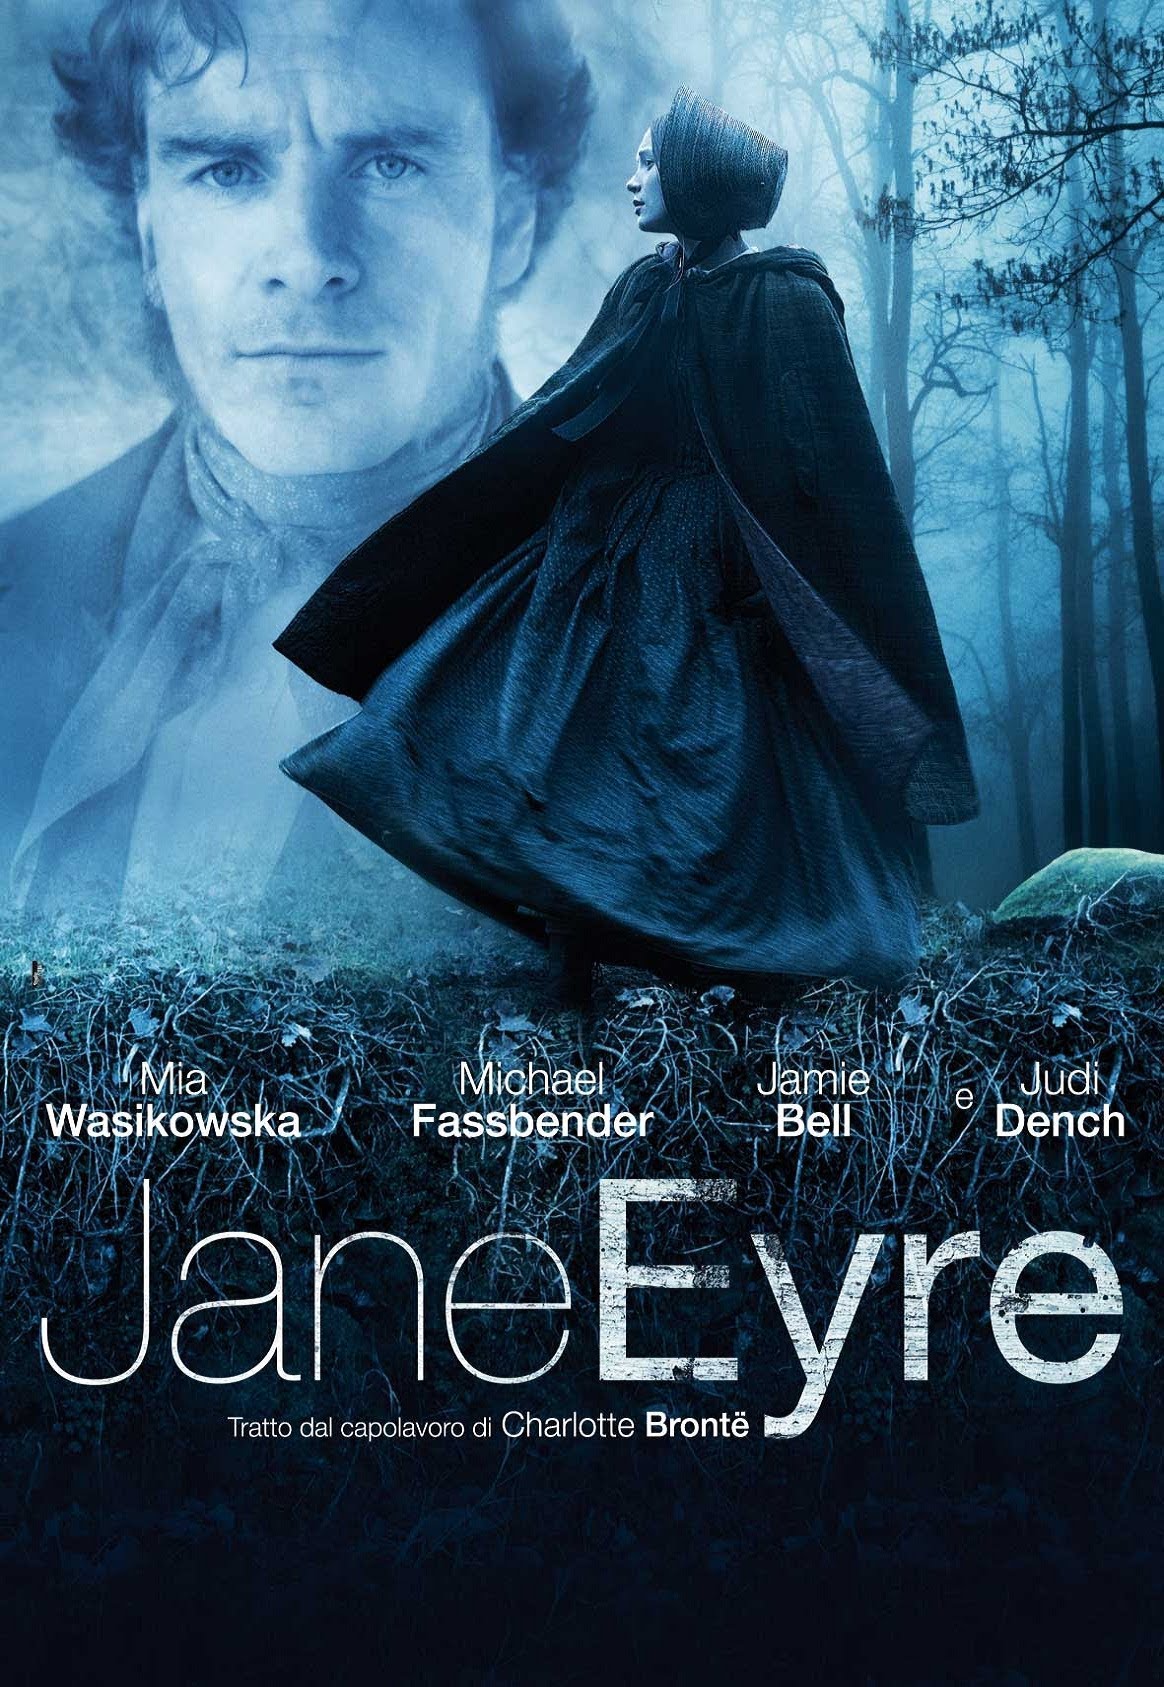 Jane Eyre [HD] (2011)